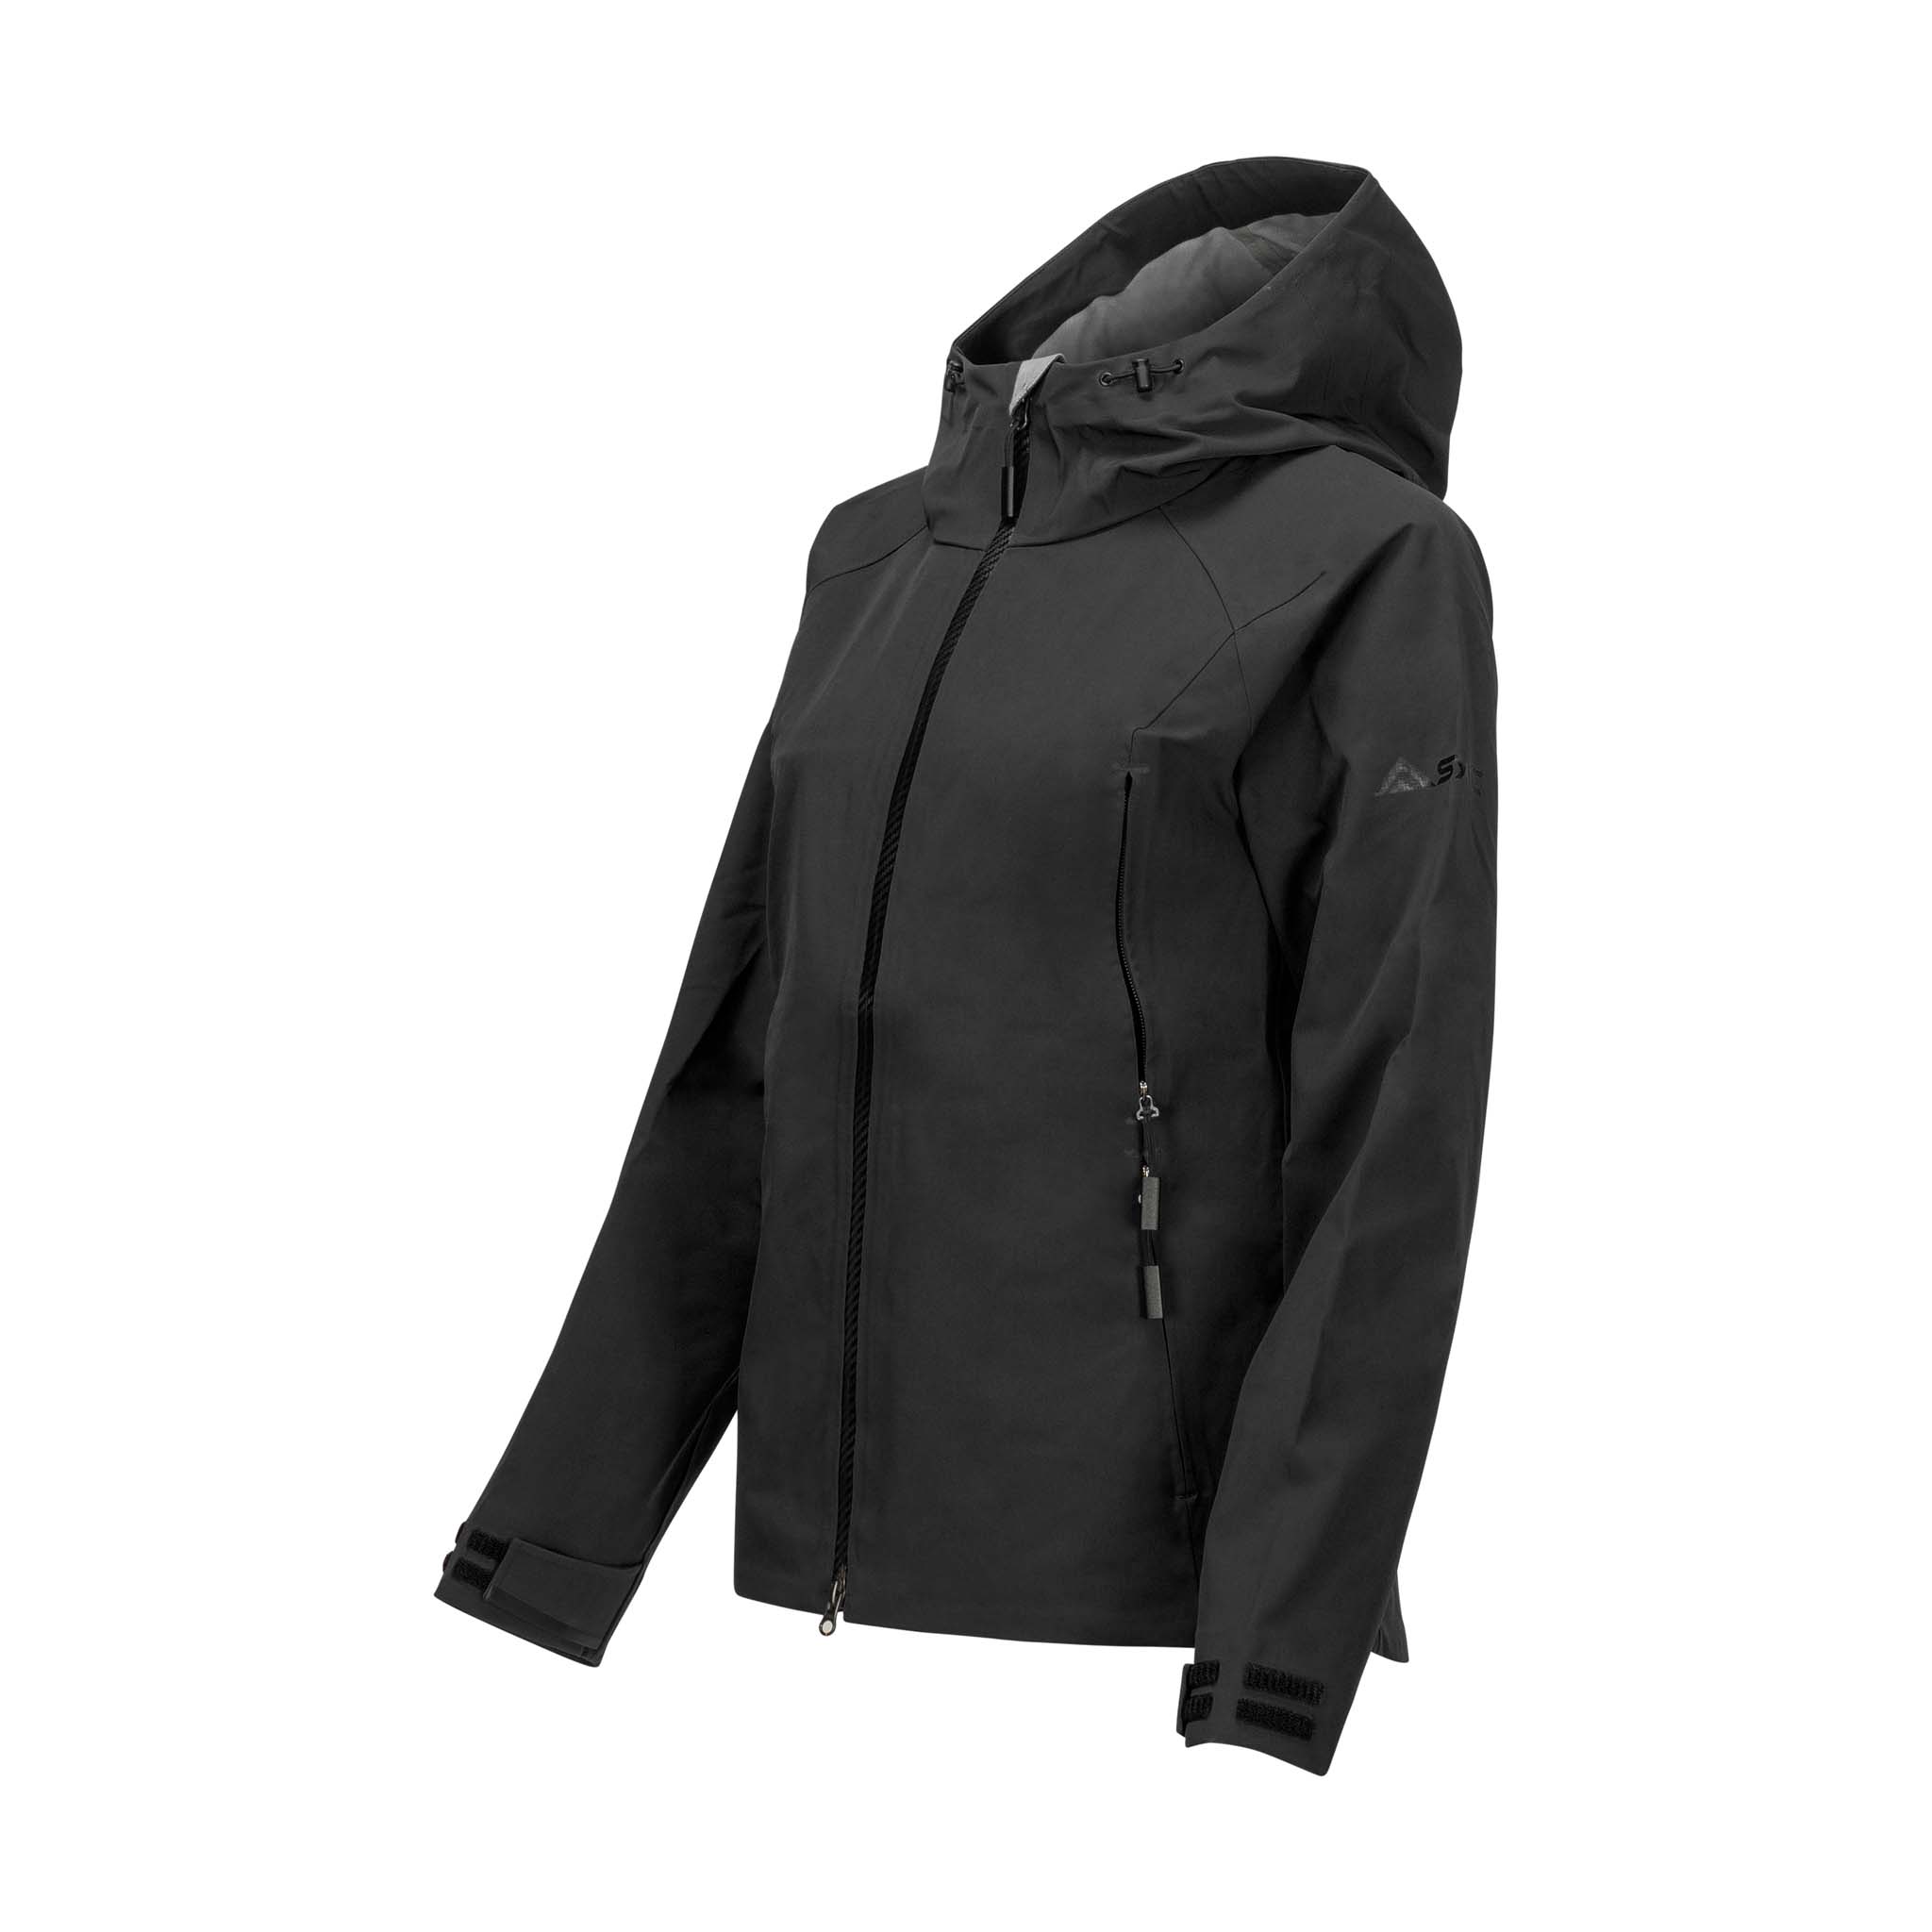 sync-performance-headwall-shell-jacket-black-side